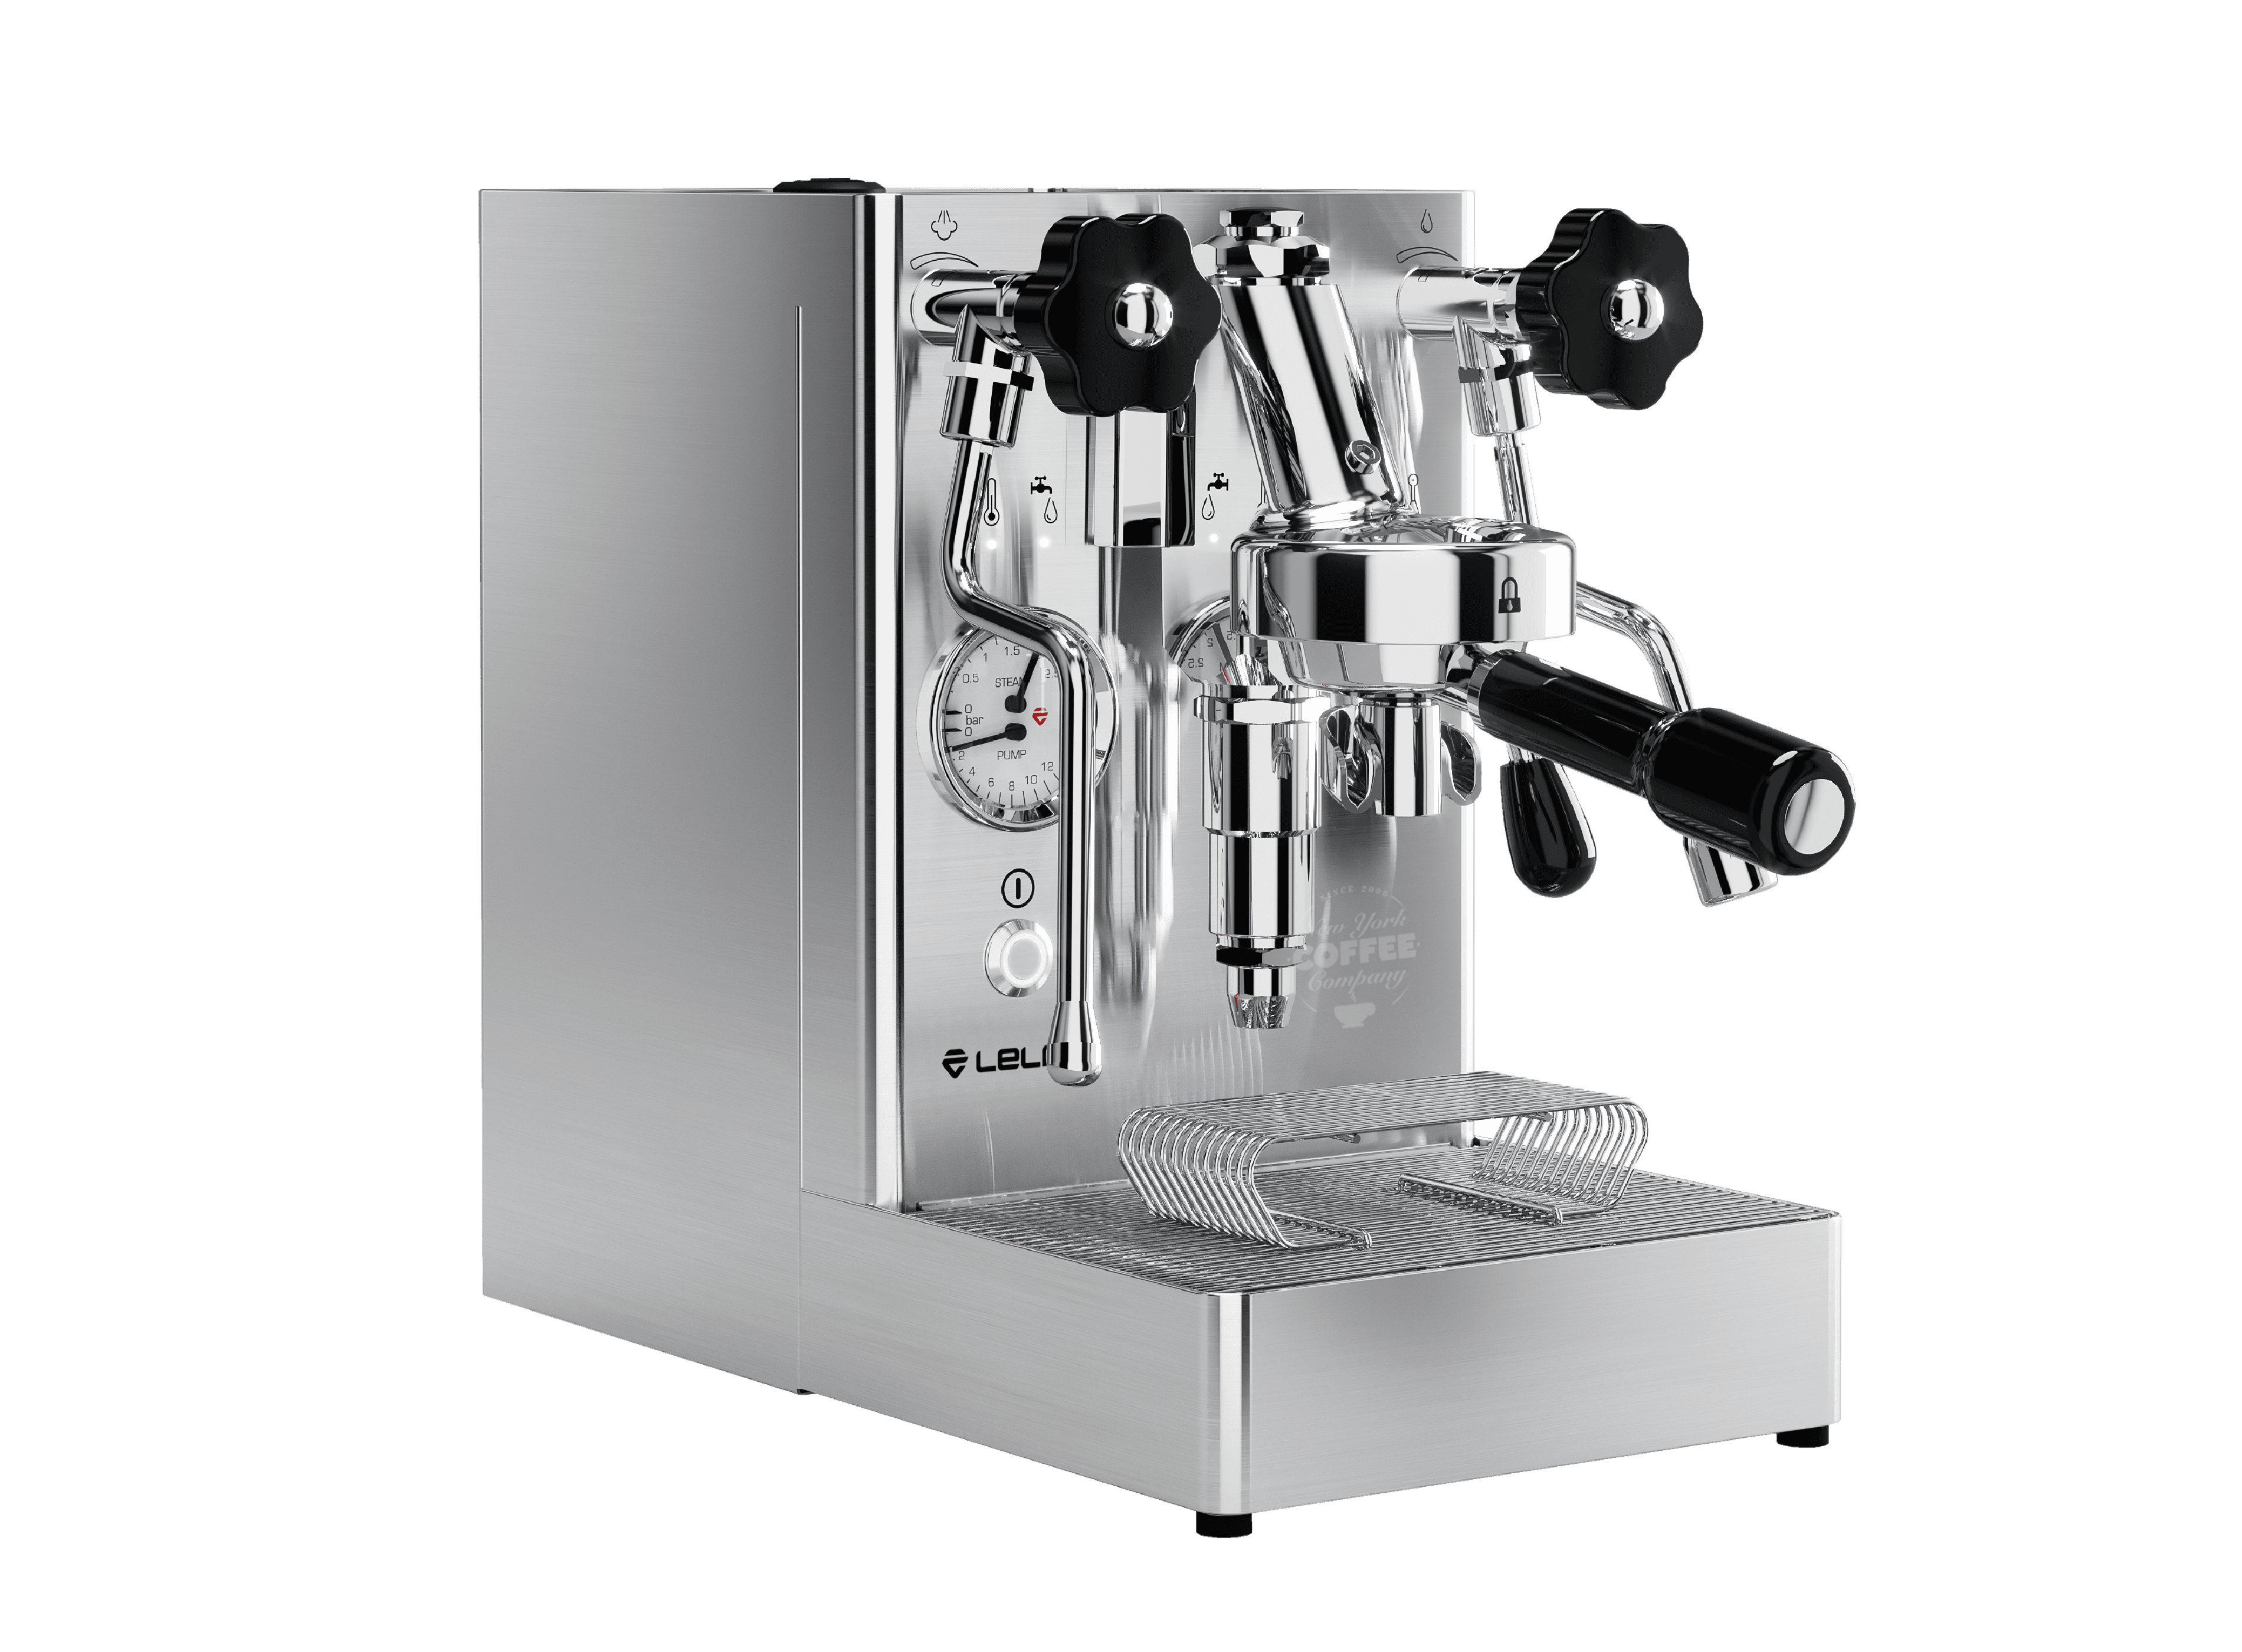 Lelit espresso machines - New York Coffee